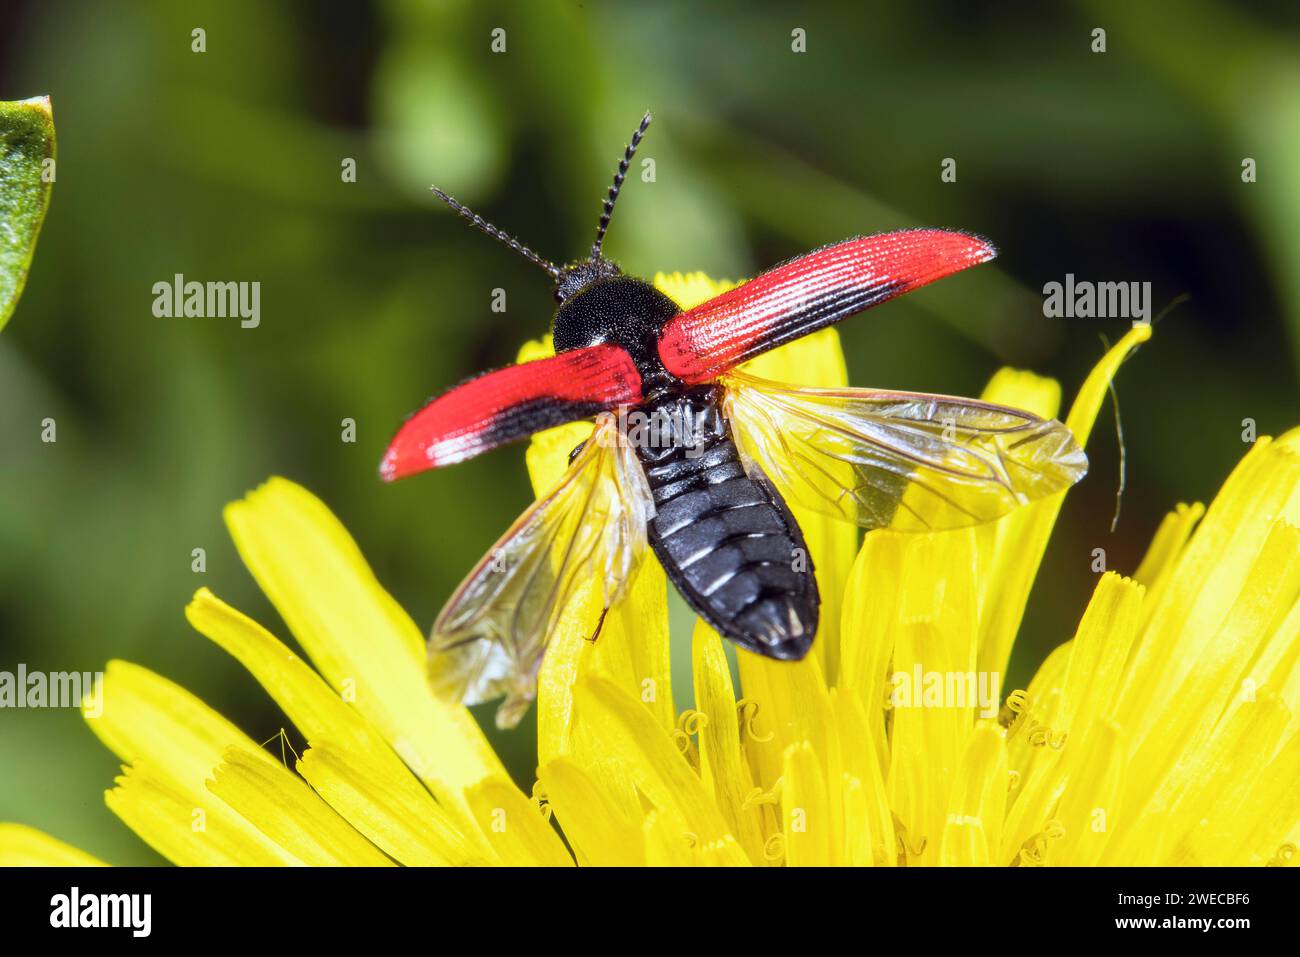 Black-centered click beetle (Ampedus sanguinolentus), starts from a composite plant, Germany Stock Photo